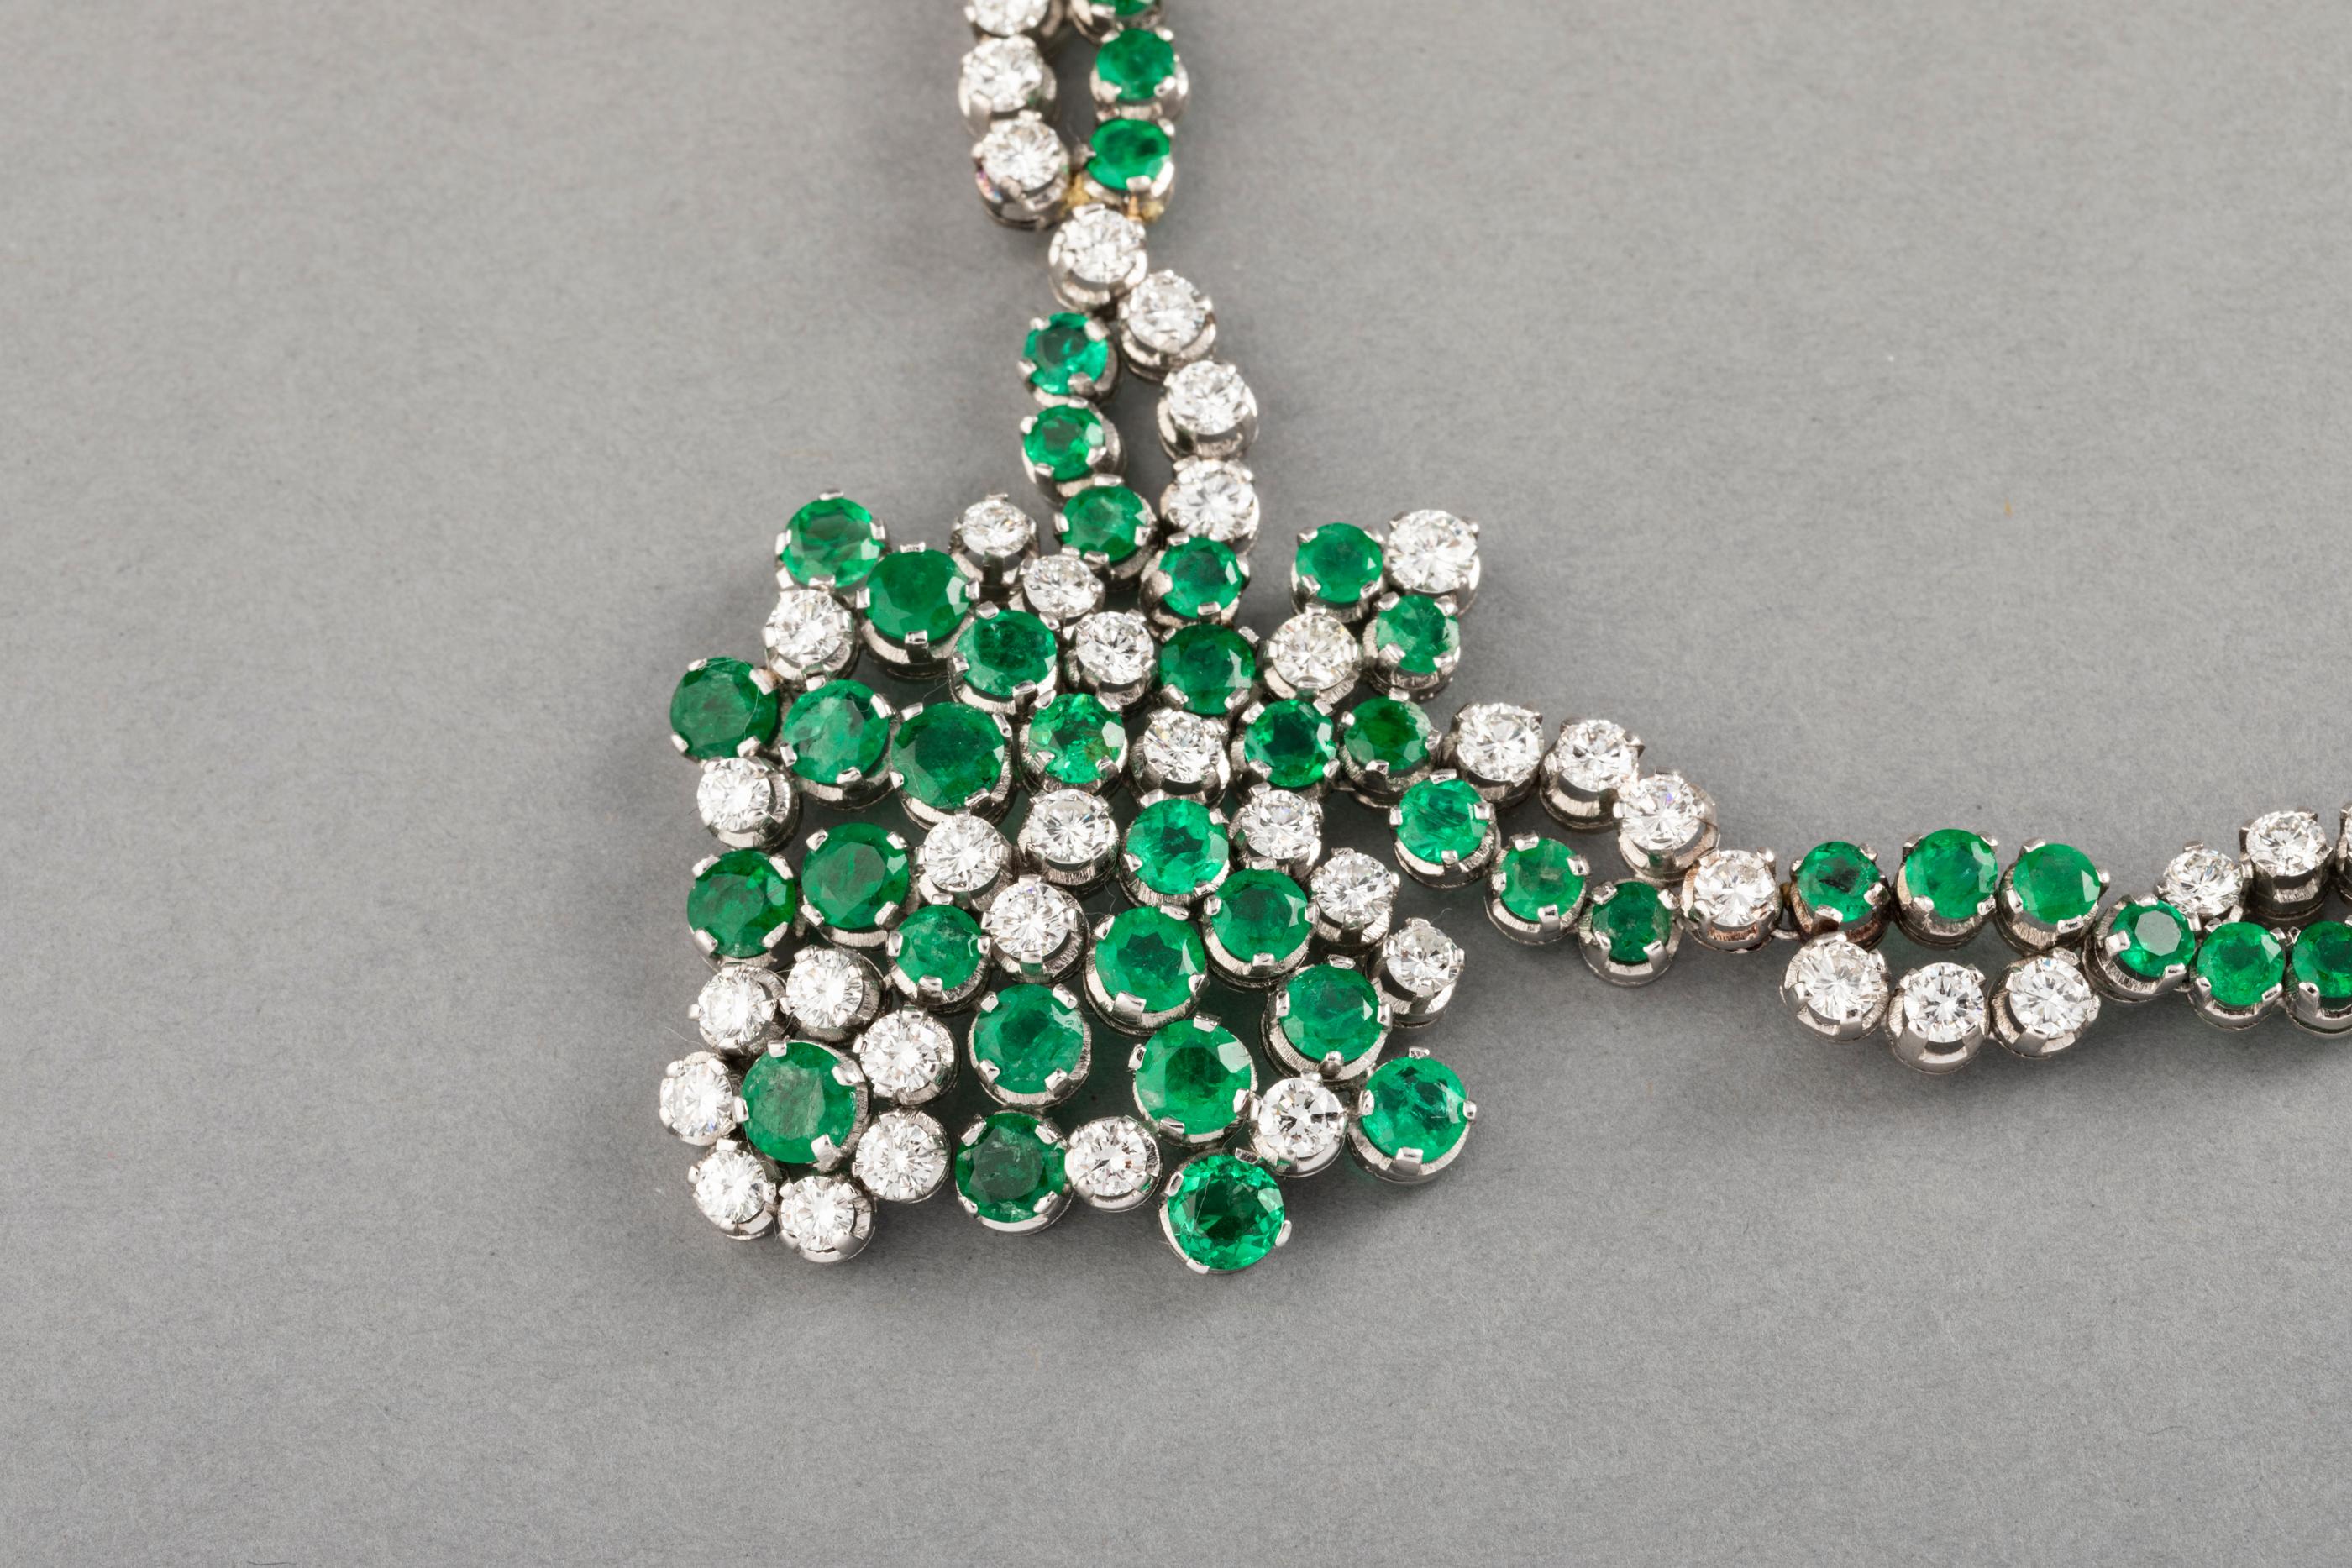 10 Carat Diamonds and 12 Carat Emeralds Necklace 1